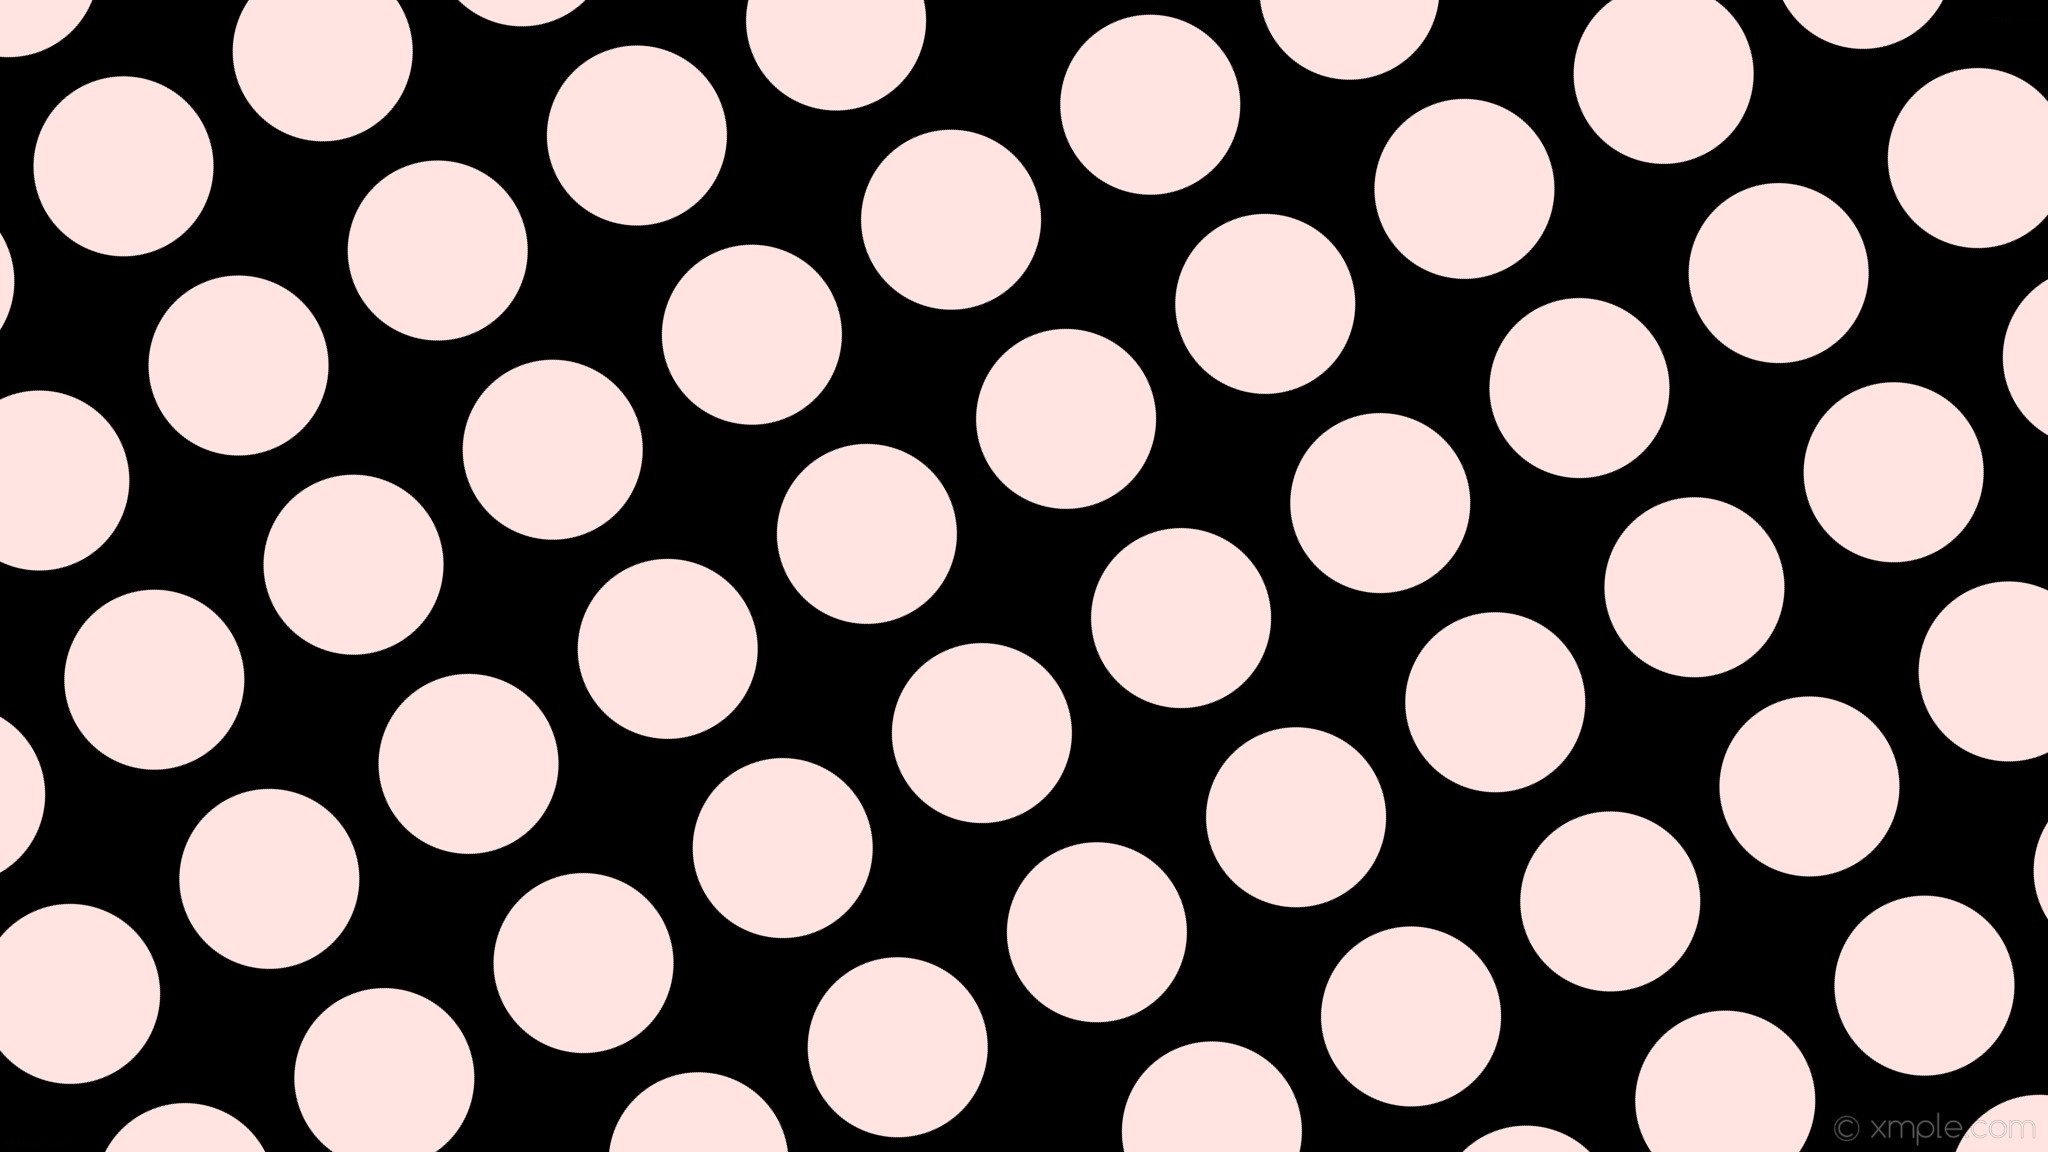 2048x1152 wallpaper white black spots polka dots misty rose #000000 #ffe4e1 30Â° 180px  230px